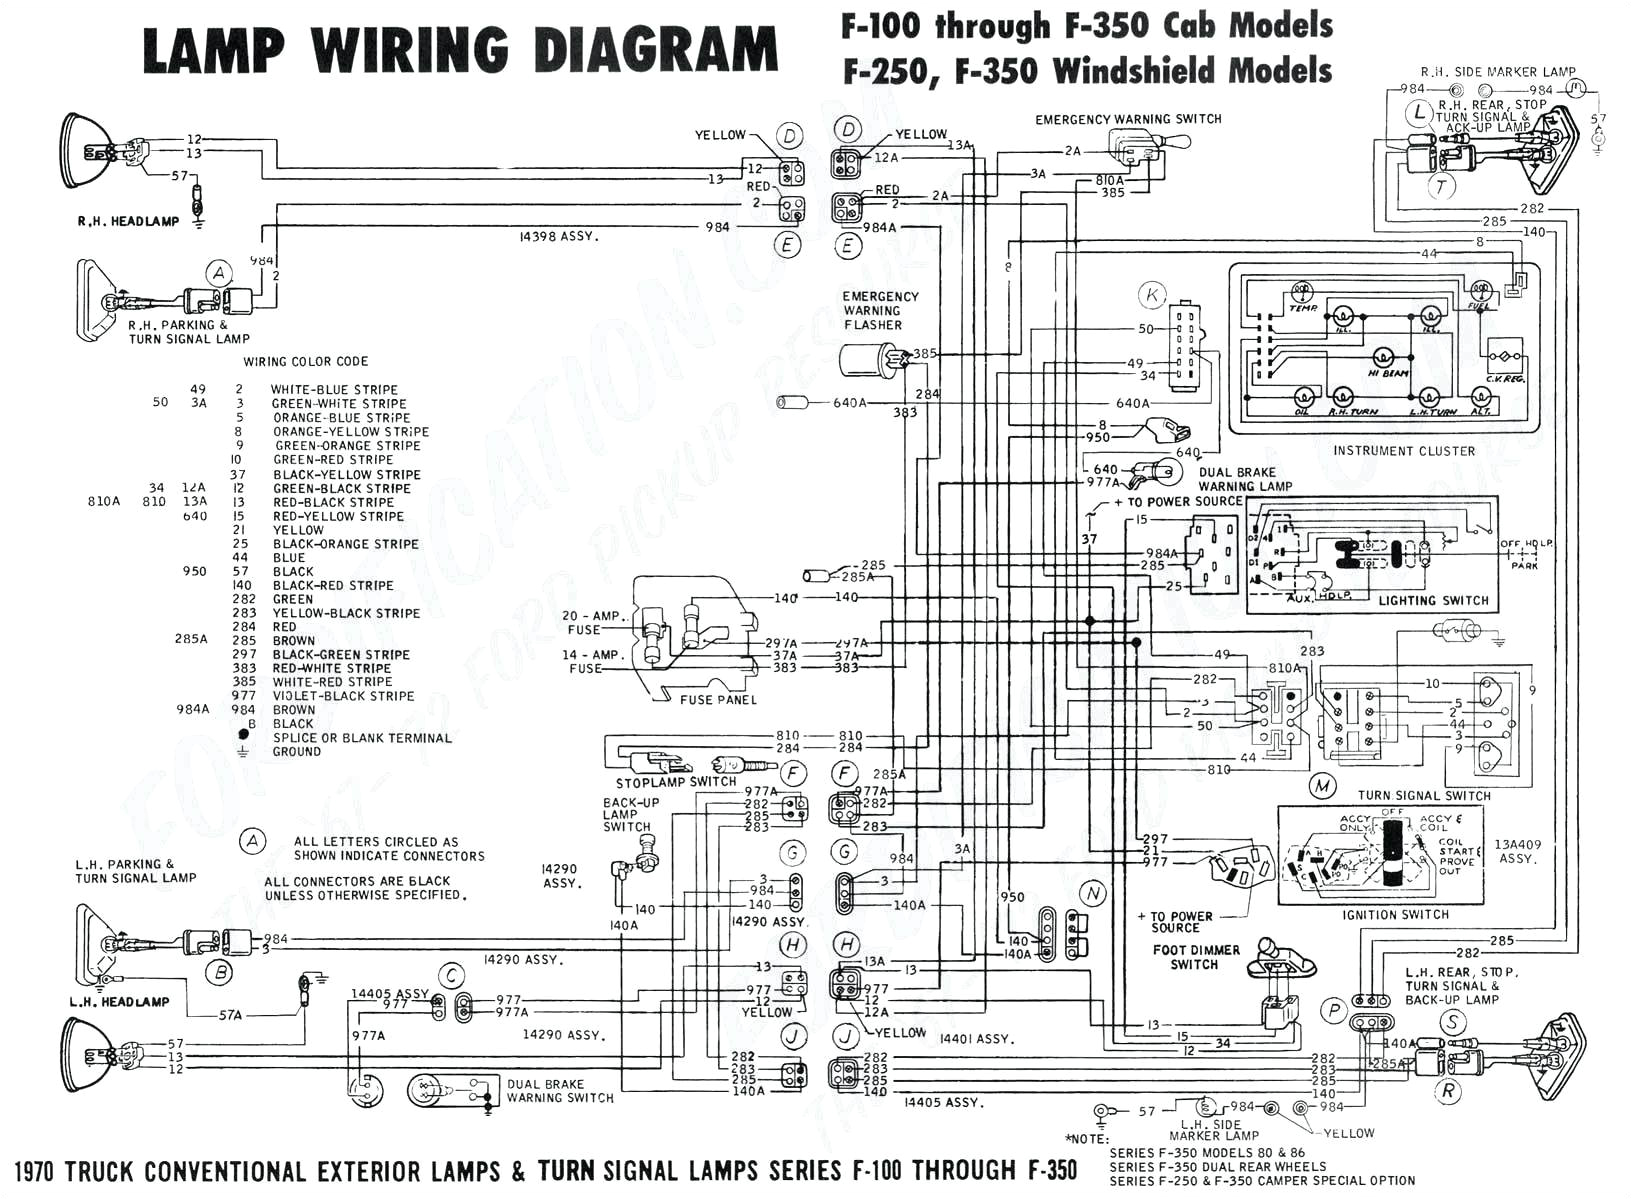 superior broom wiring diagrams wiring diagram description superior broom wiring diagrams wiring diagram option superior broom